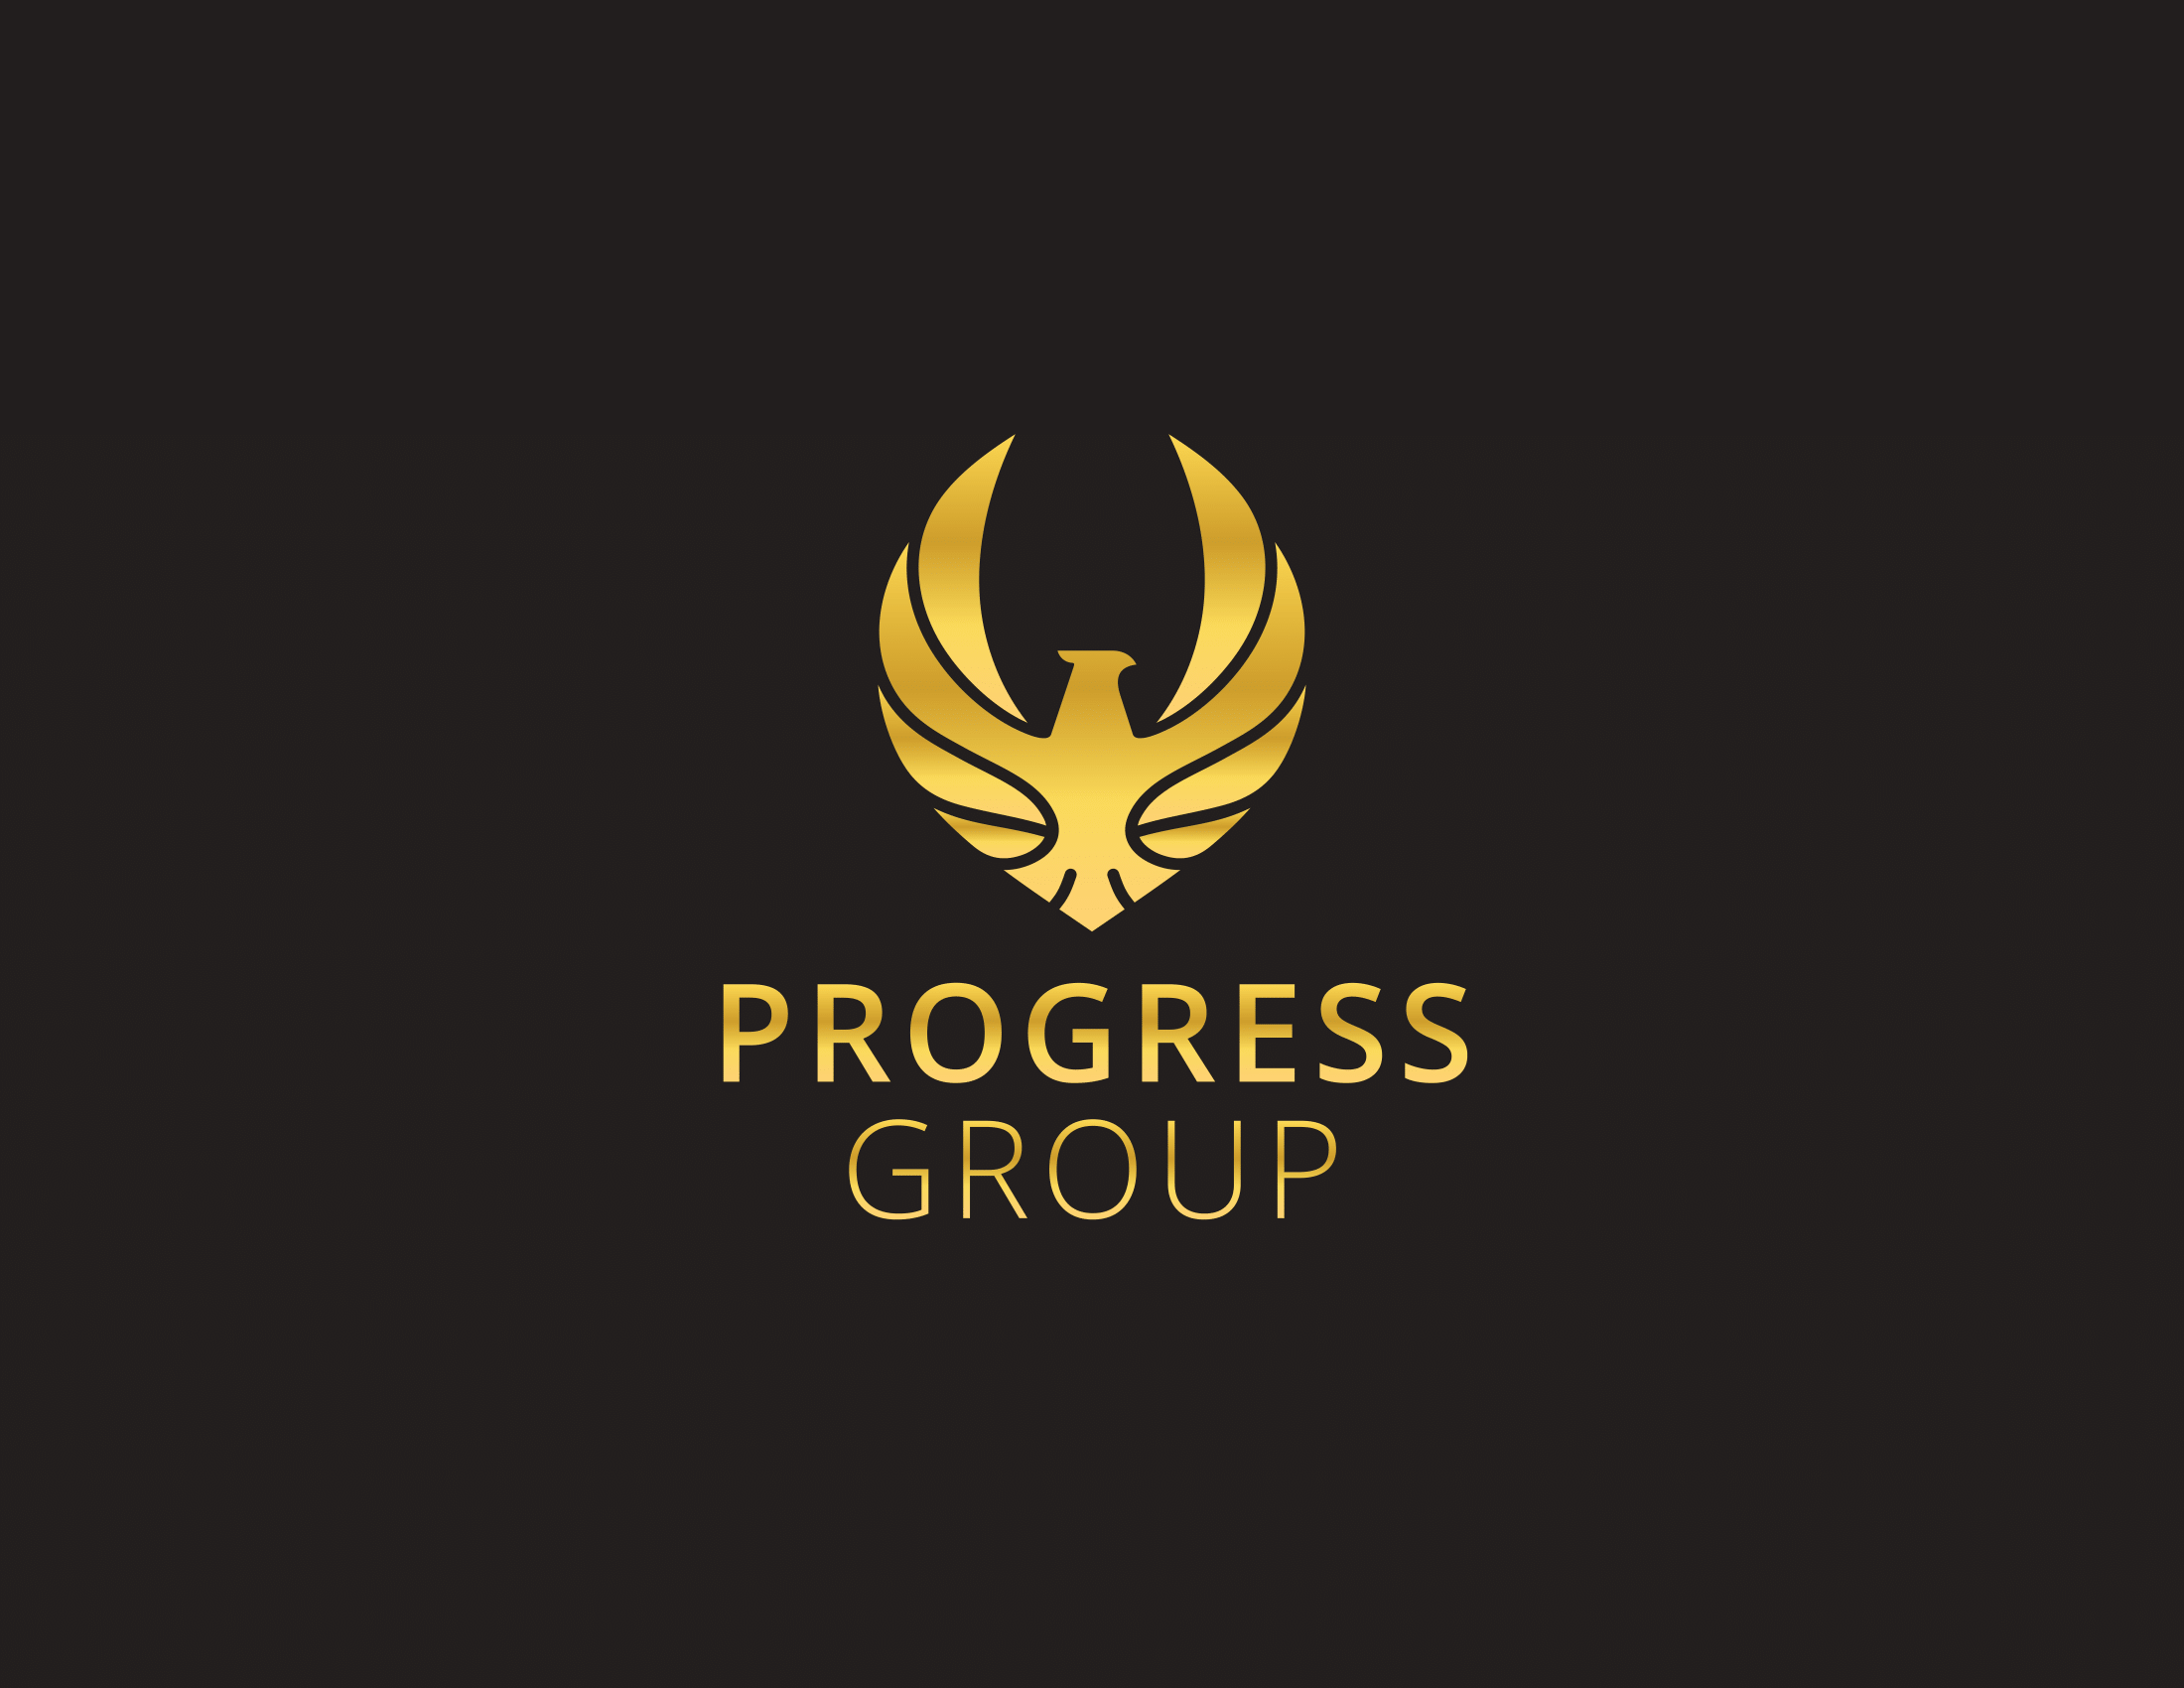 Progress Group Inc. Tone Logo